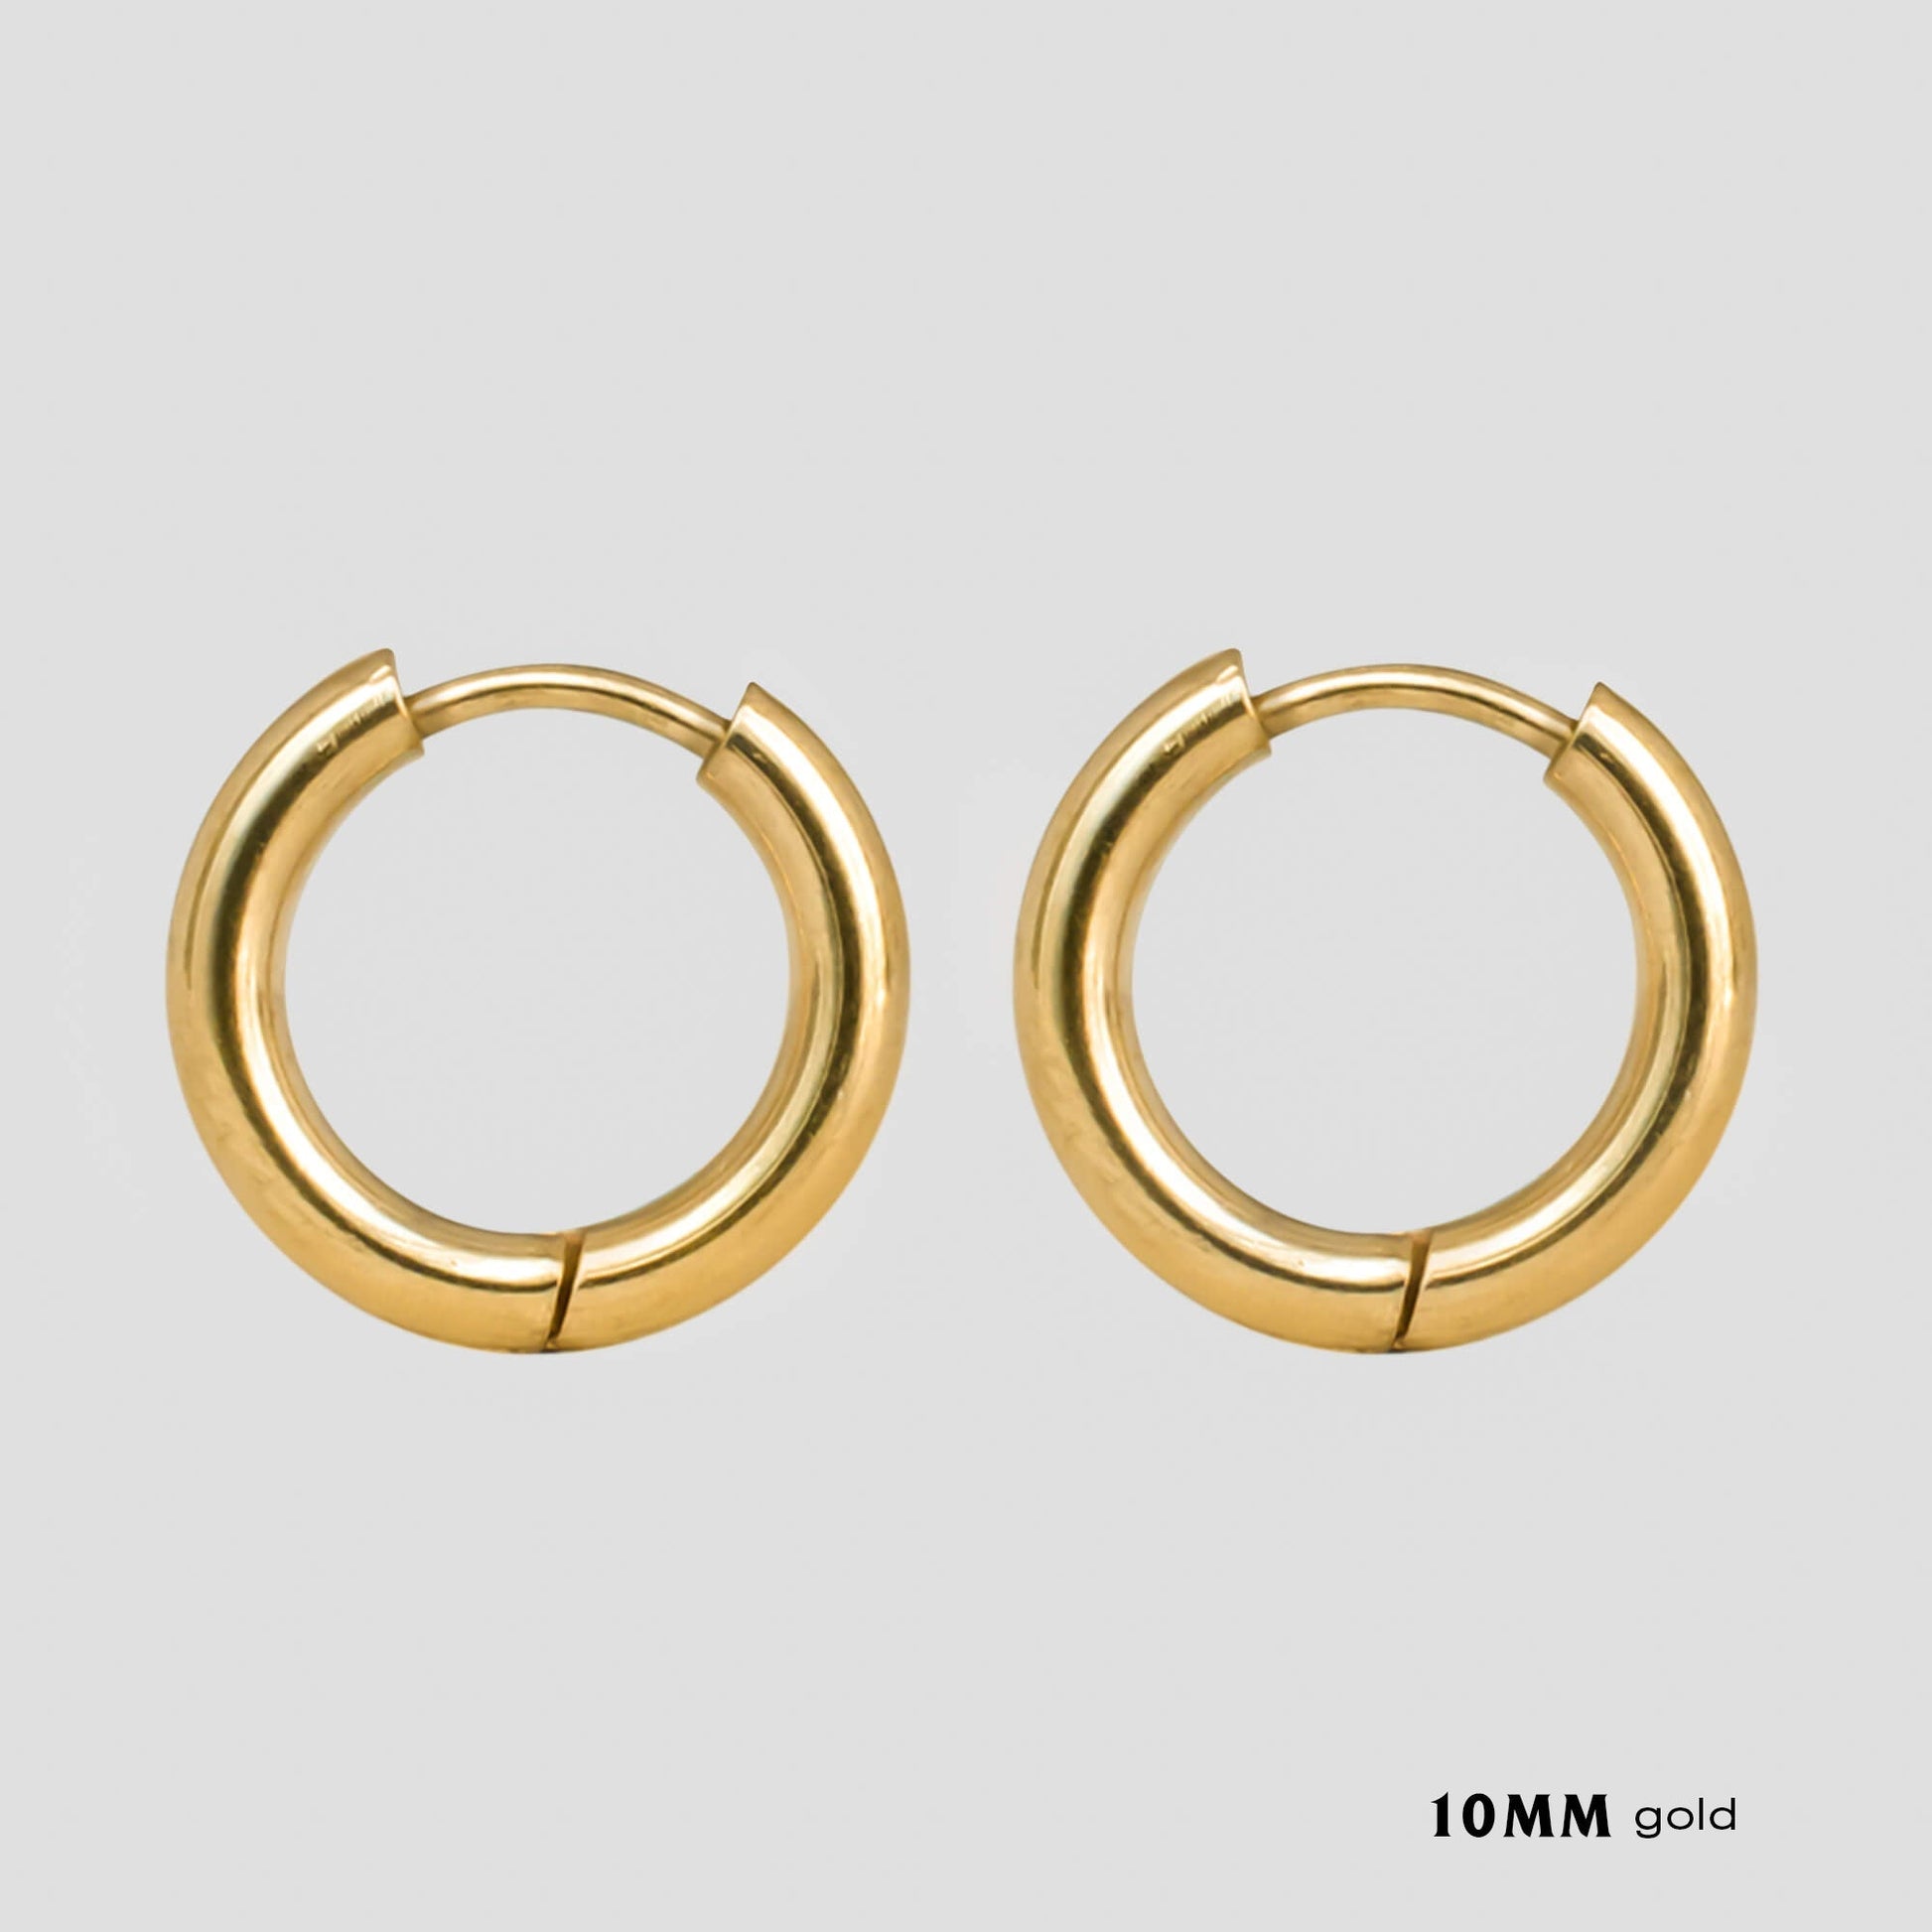 GOLD EARRING BACKS (ONE PAIR) - Tat2 Designs